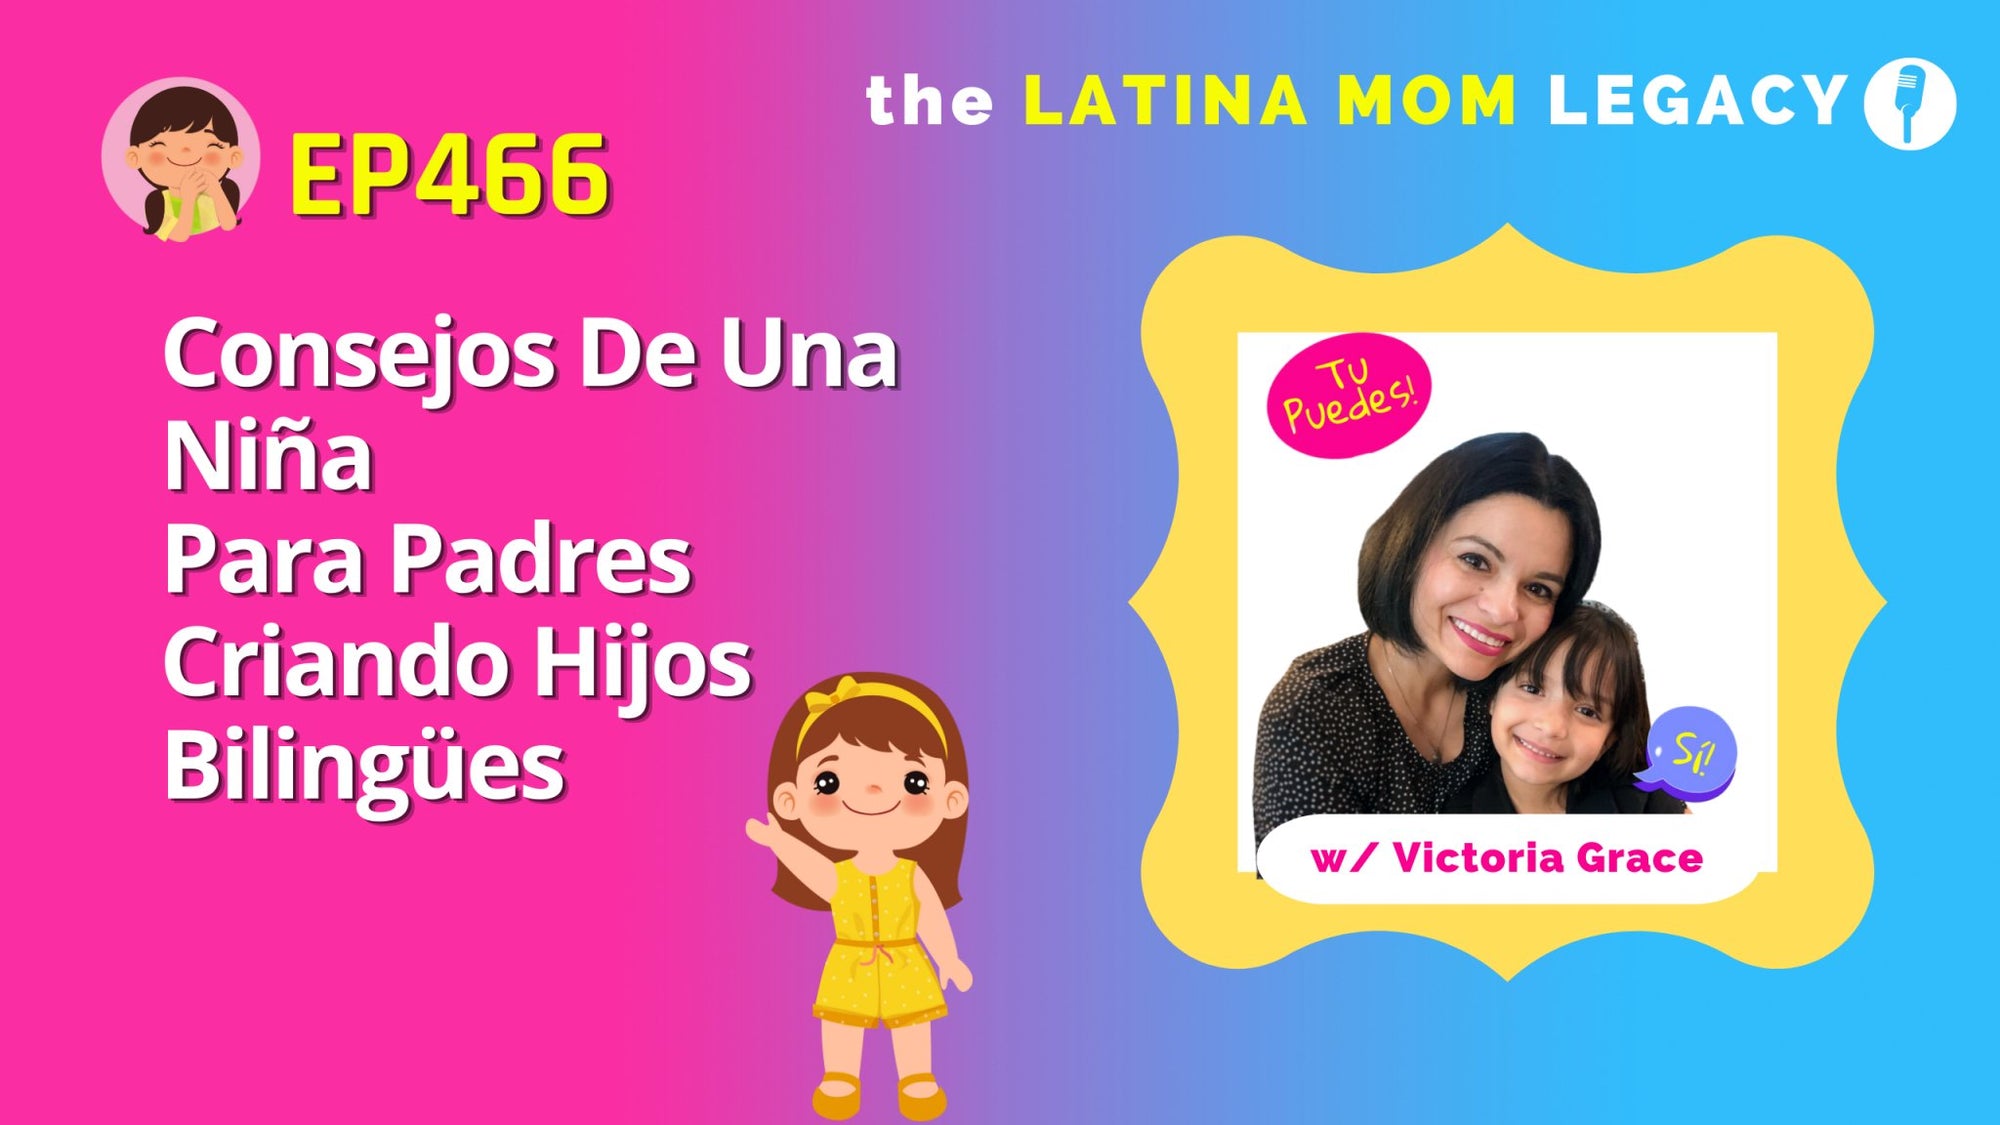 466-Consejos De Una Niña Para Padres Criando Hijos Bilingües, Bilingual Parenting Tips From an 8 Year Old - Mi LegaSi